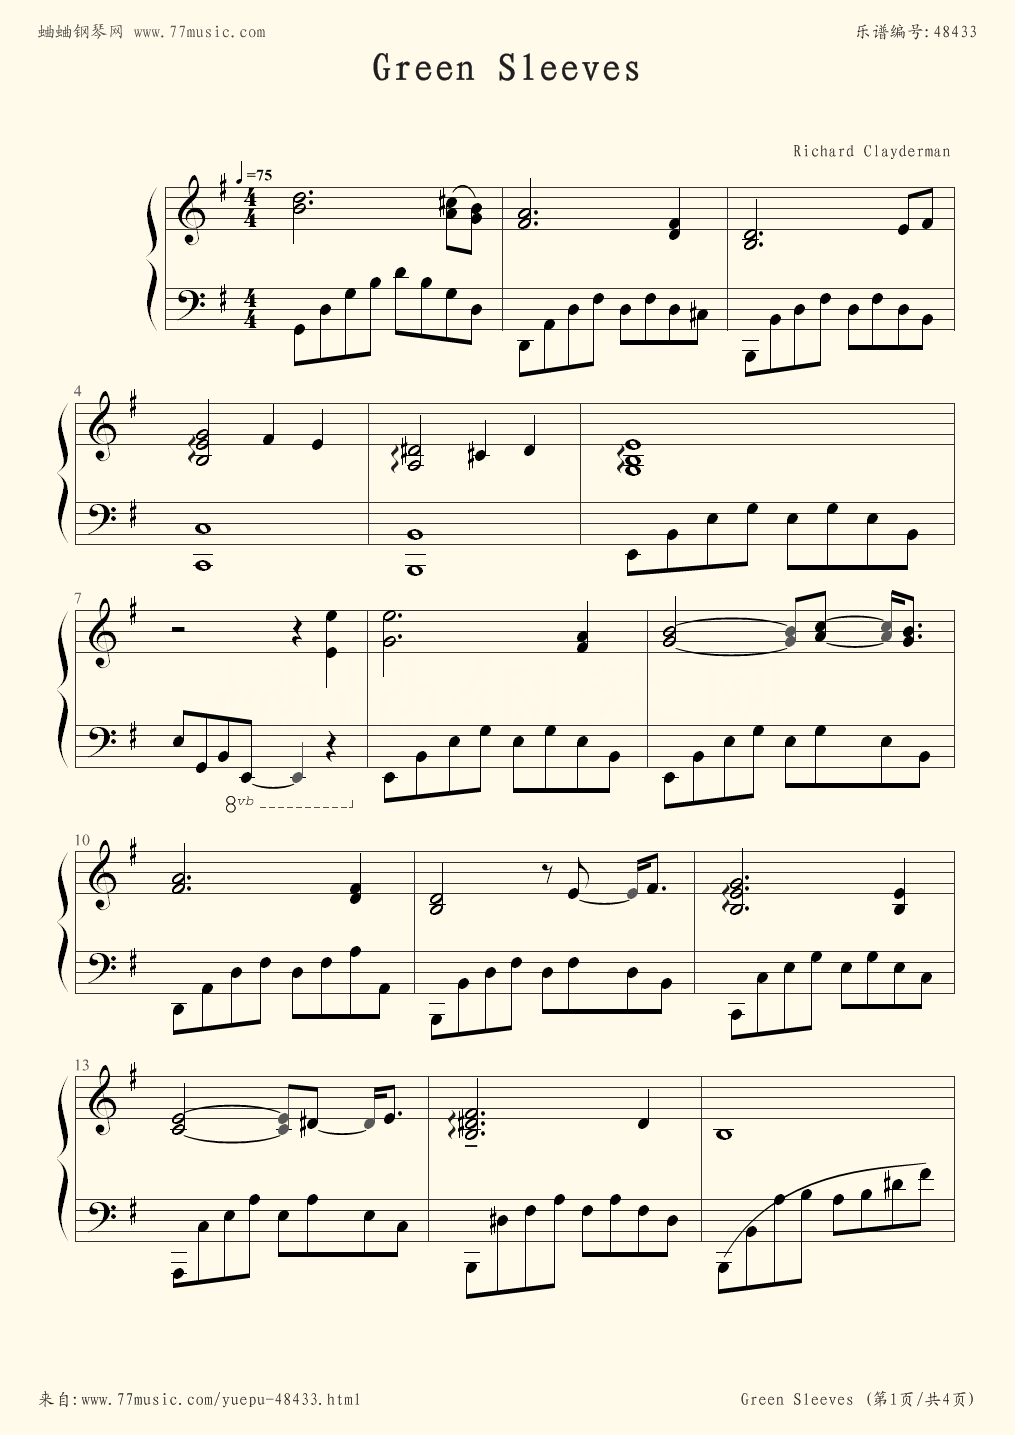 Green Sleeves - Richard Clayderman - Flash Version2 Piano Sheet Music Free